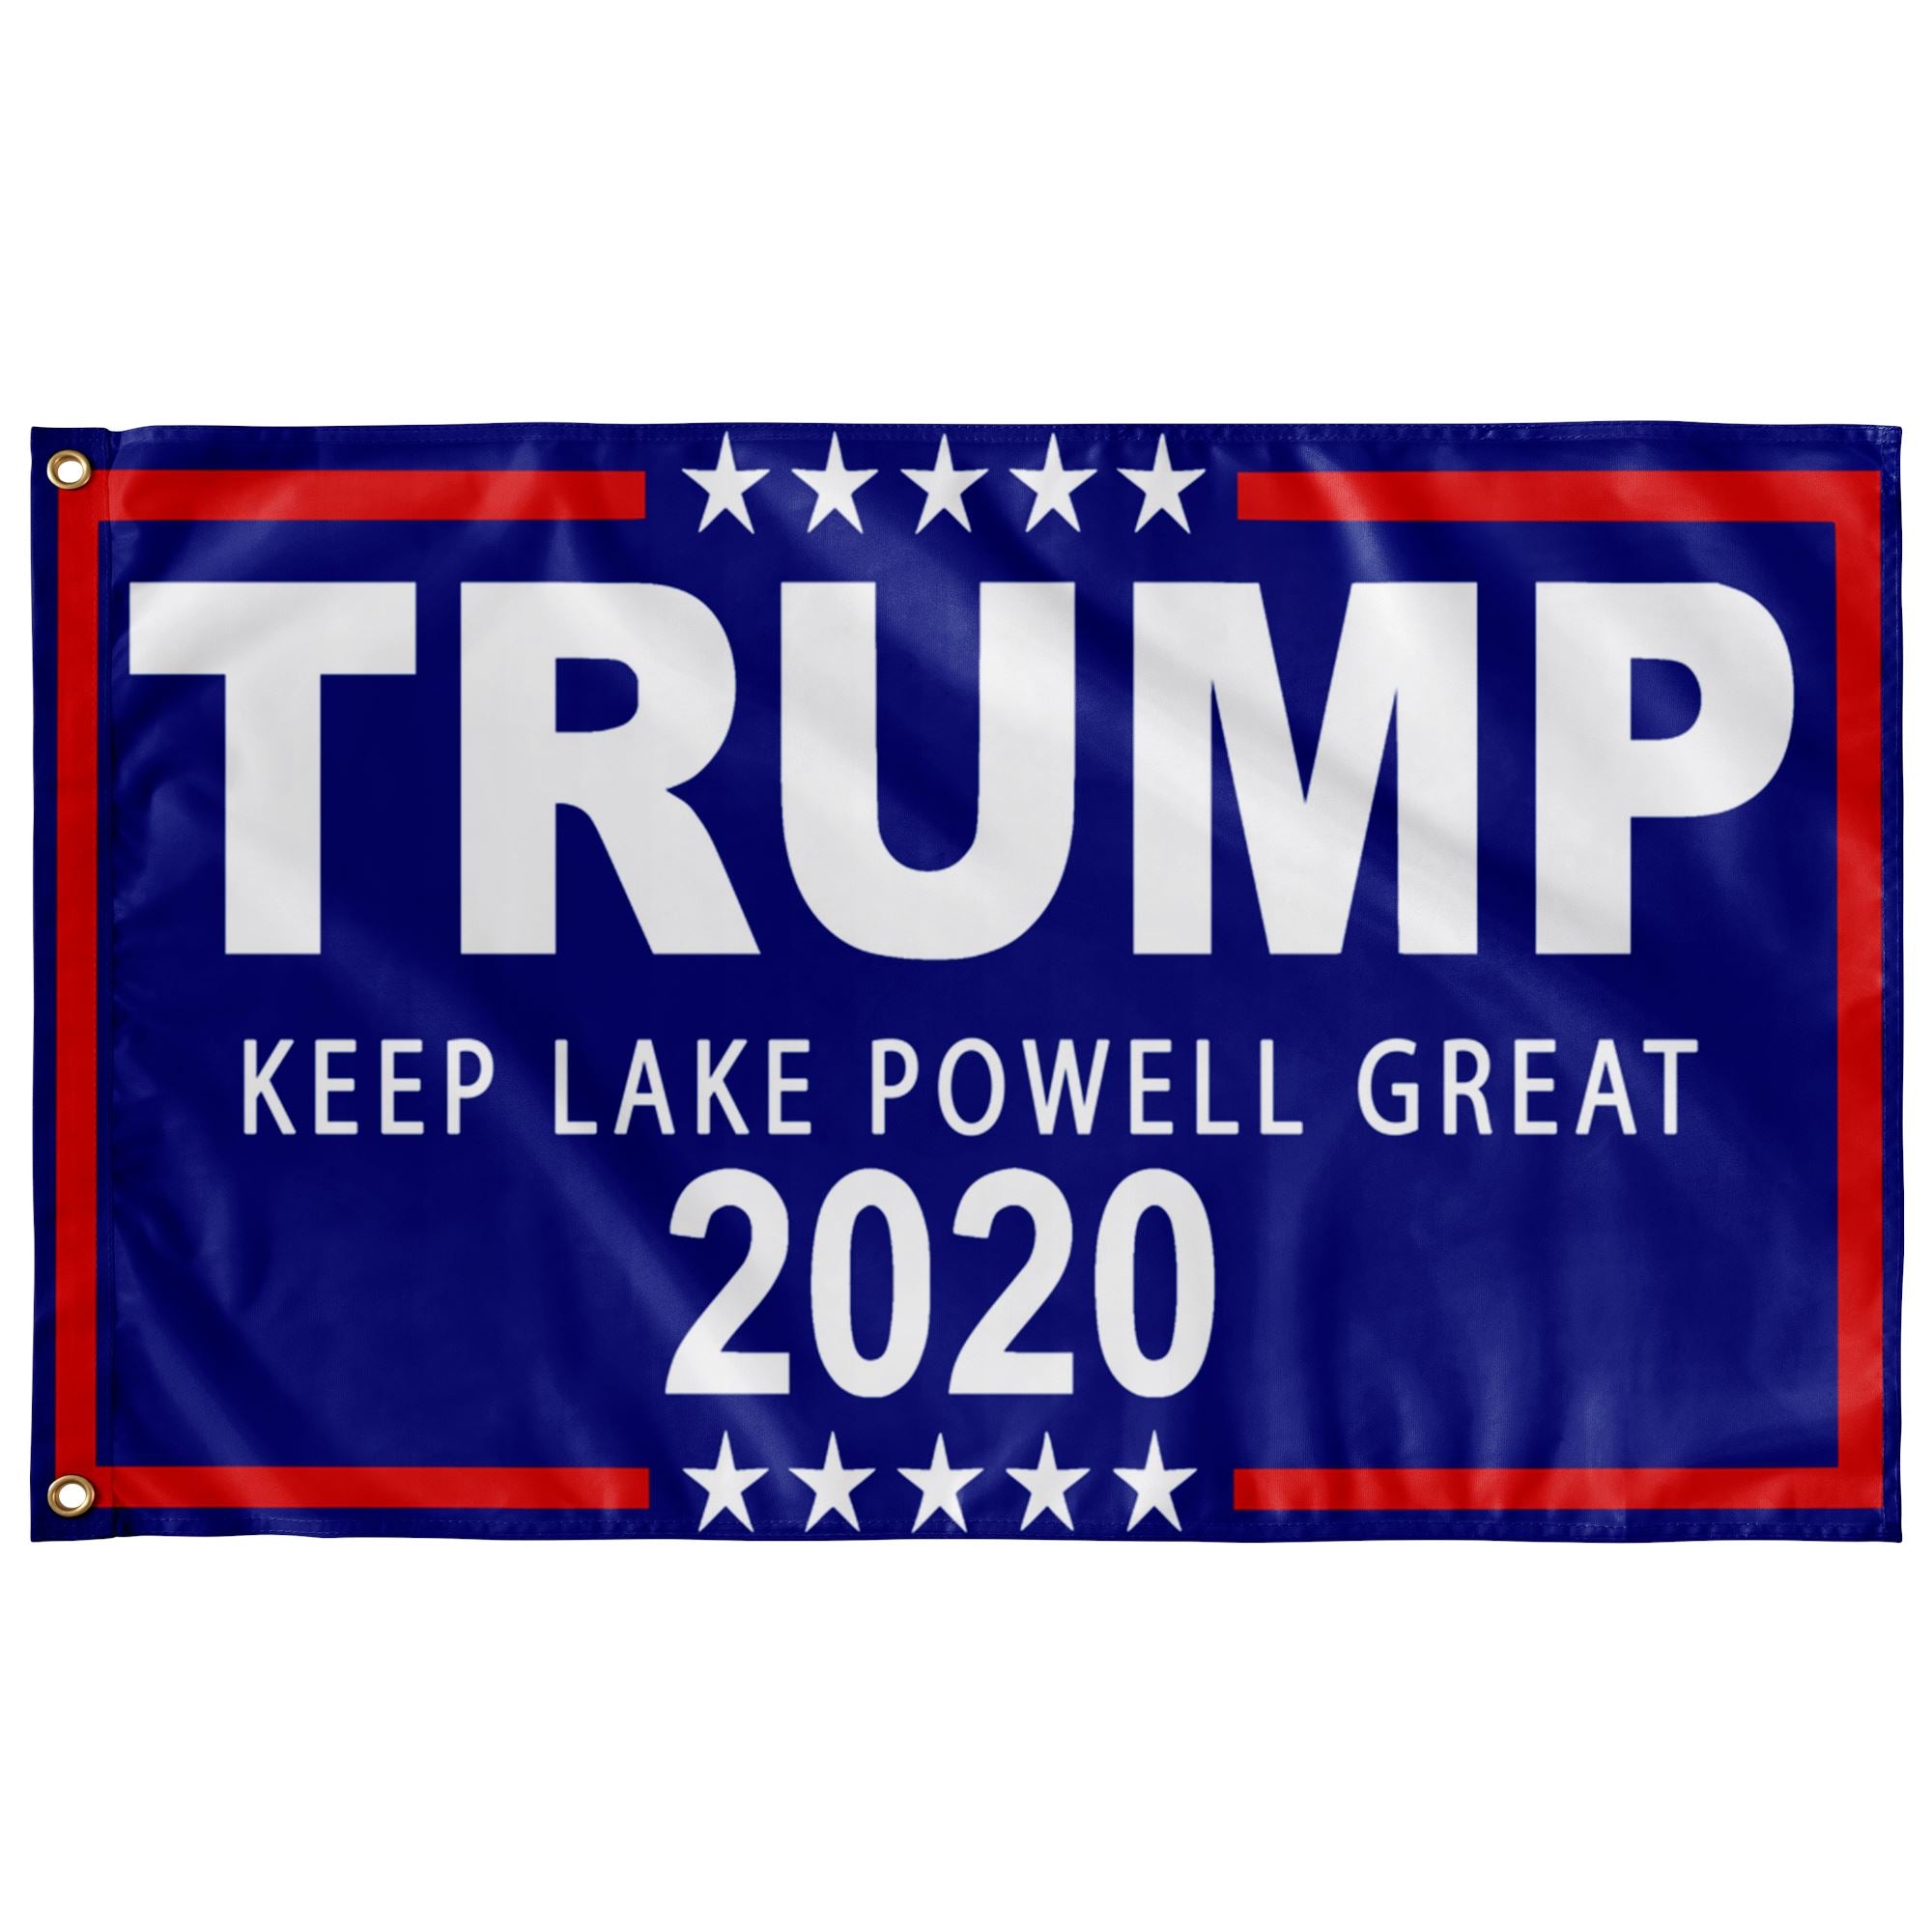 Trump Boat Flags - Keep Lake Powell Great - Houseboat Kings